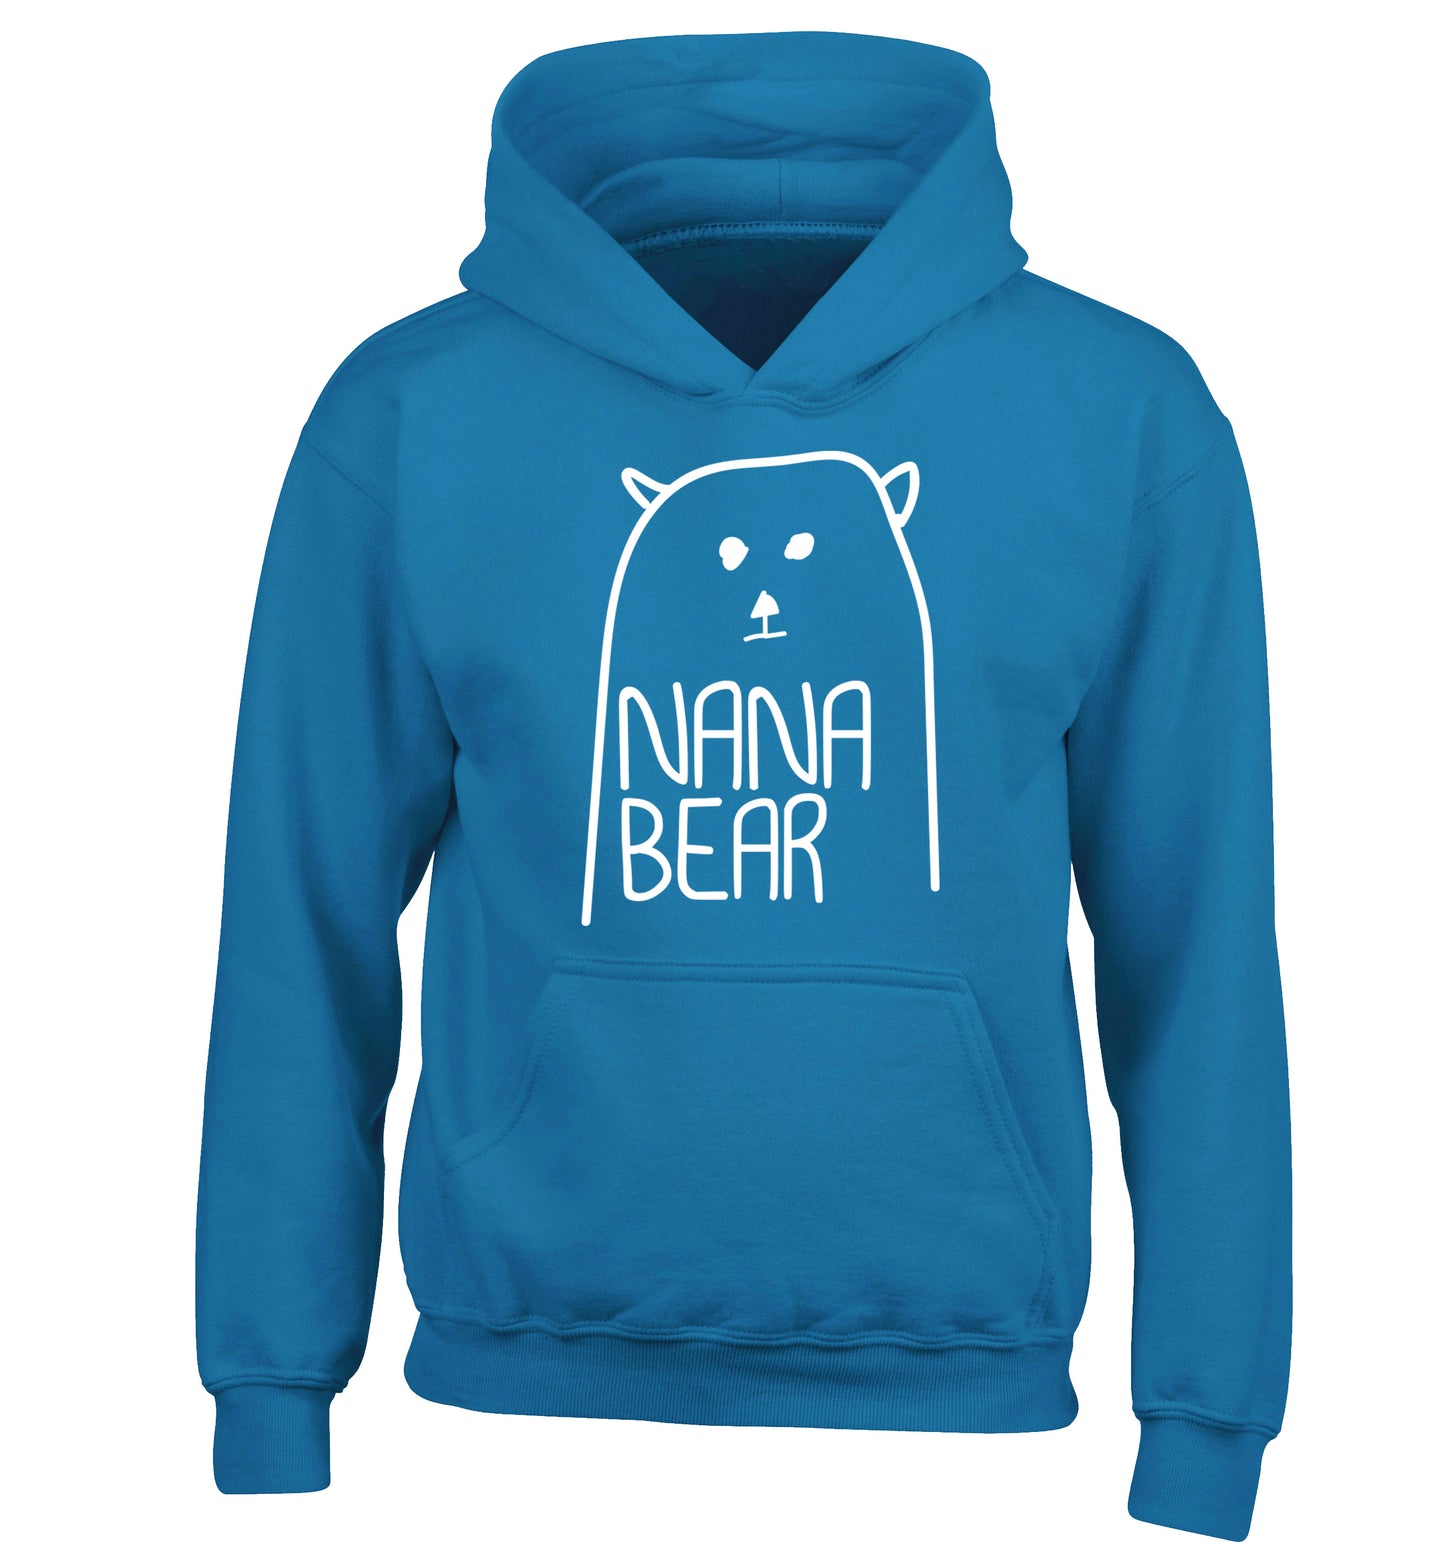 Nana bear children's blue hoodie 12-13 Years